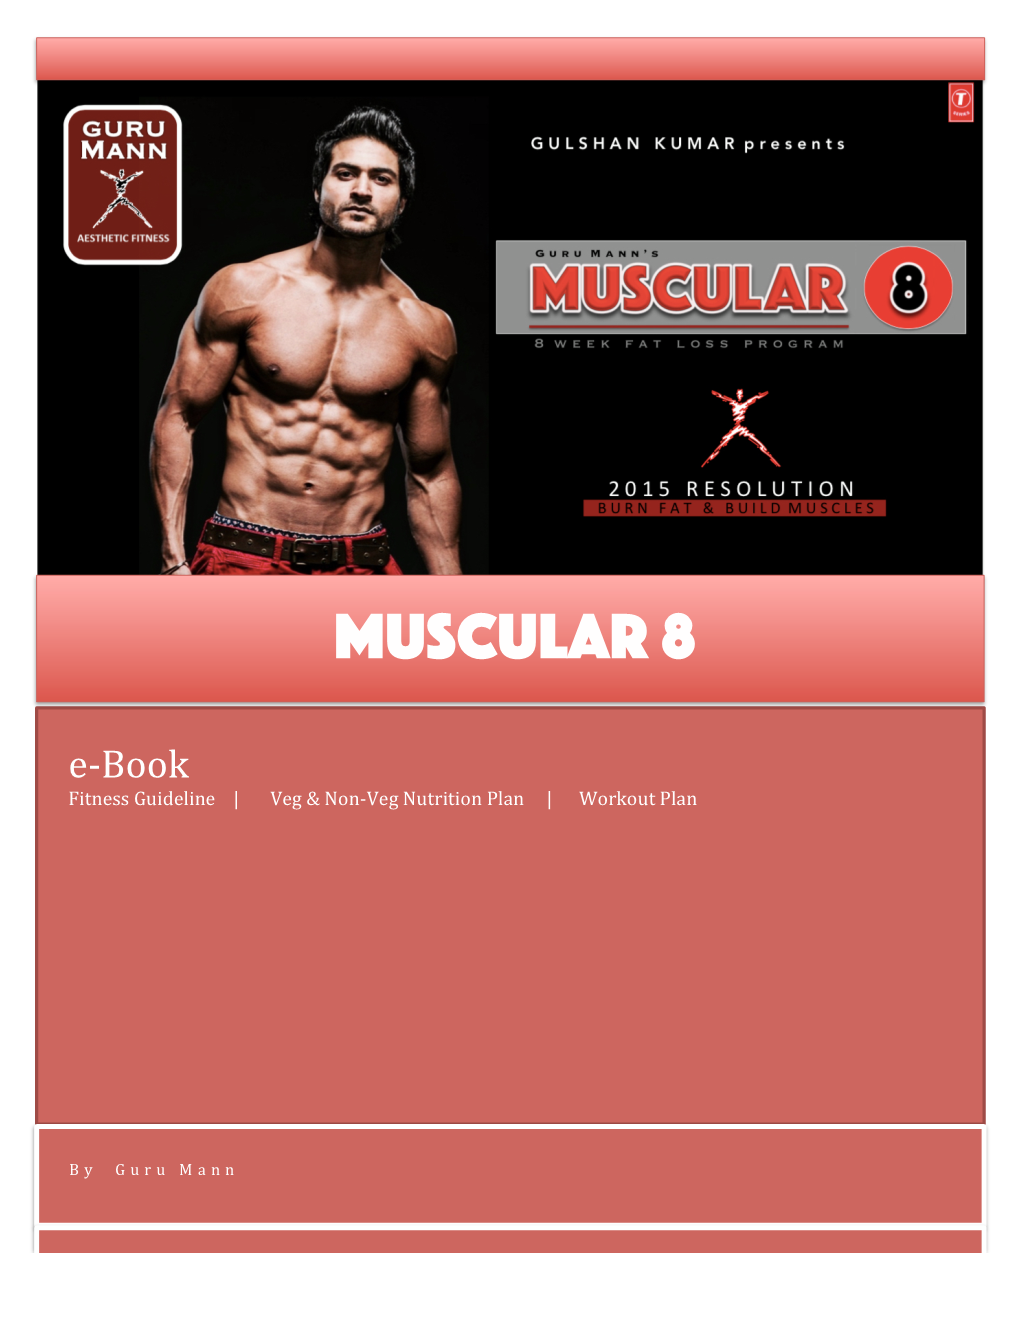 MUSCULAR 8 E-Book Fitness Guideline | Veg & Non-Veg Nutrition Plan | Workout Plan